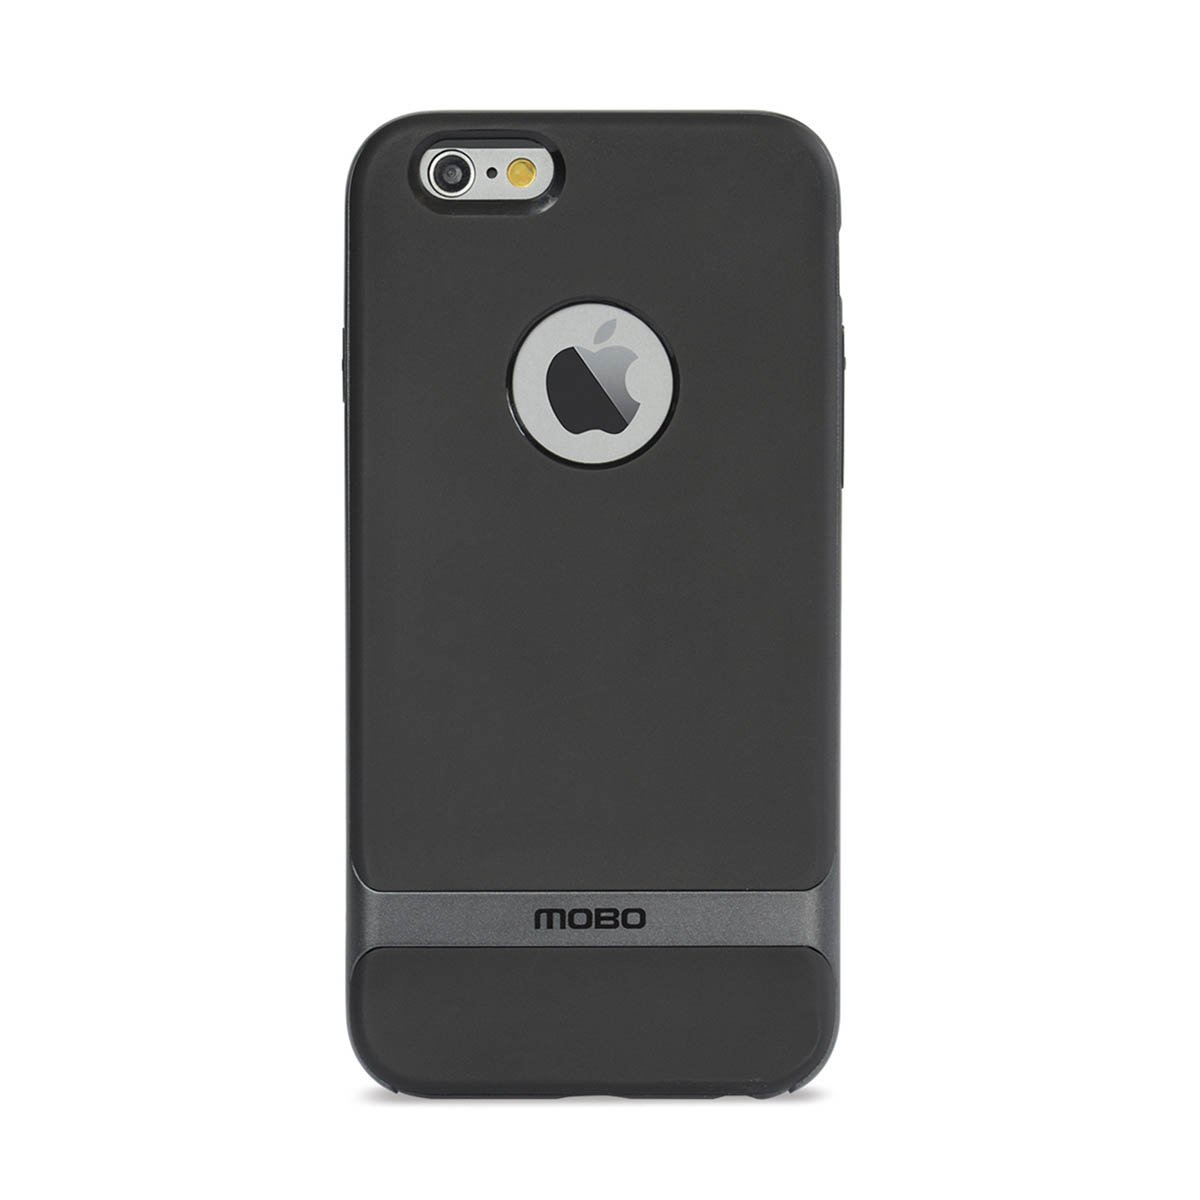 Caratula Mobo Wince Iphone 6/6S 4.7 Pulgadas Negro Carwiniphone6S 4.7